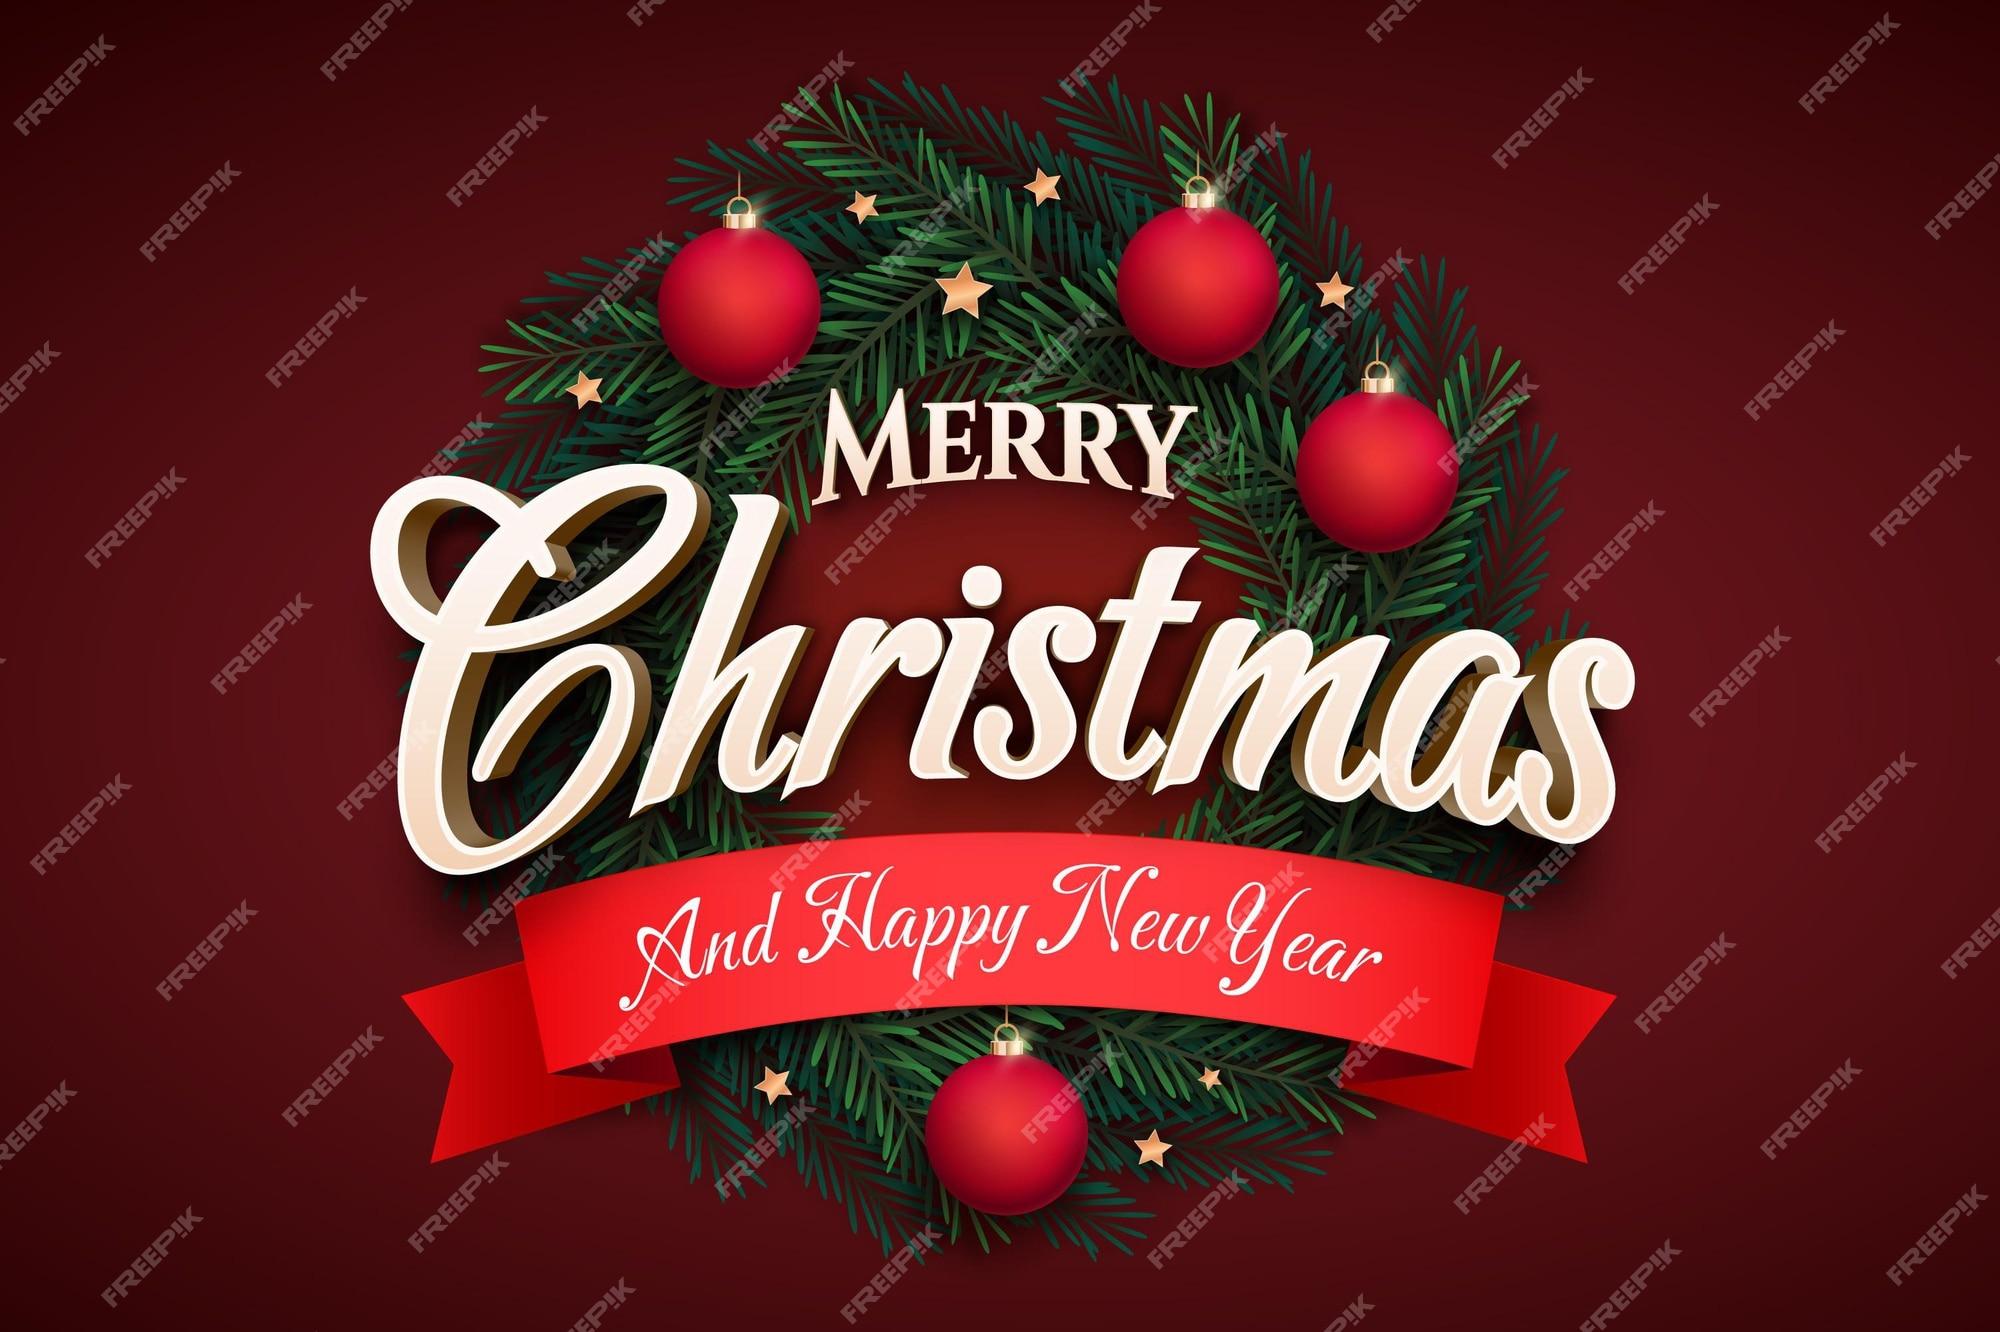 Happy Christmas Images Free Download on Freepik